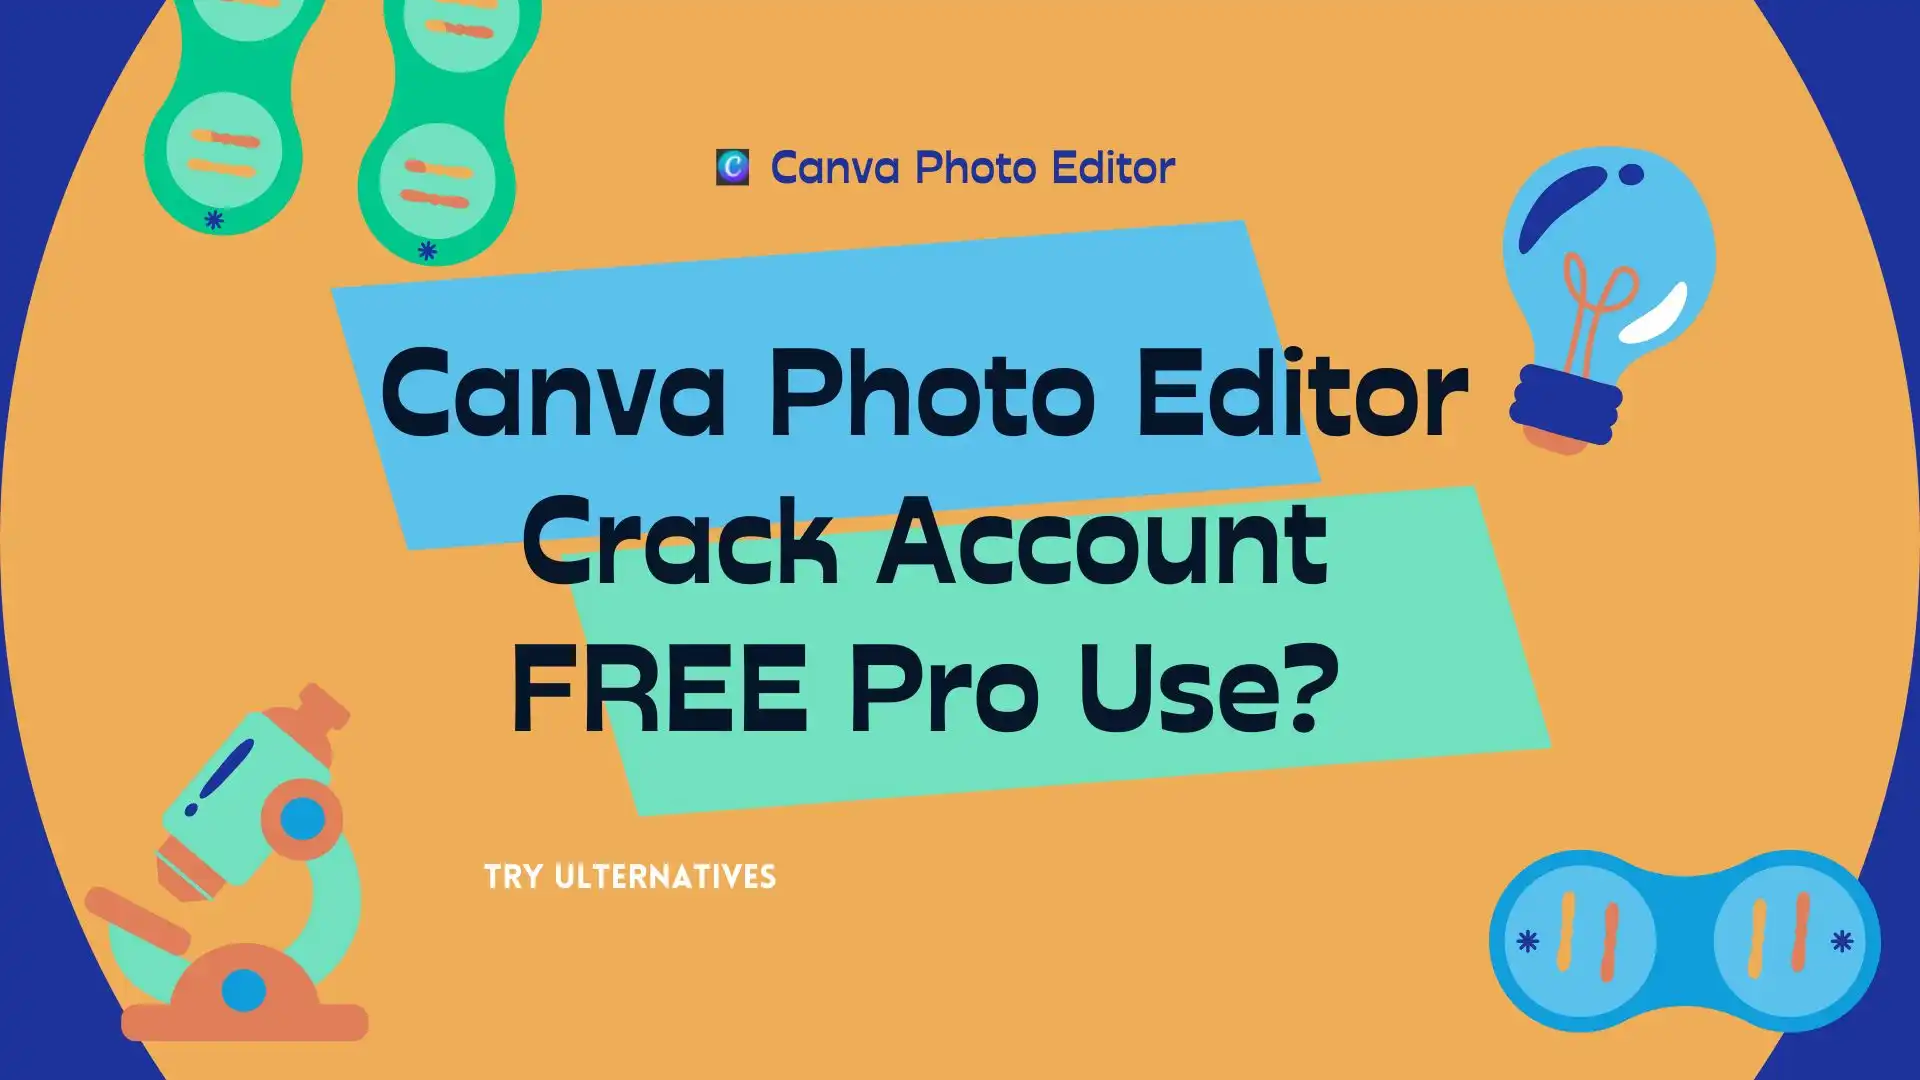 Canva Photo Editor Crack Account FREE Pro Use?